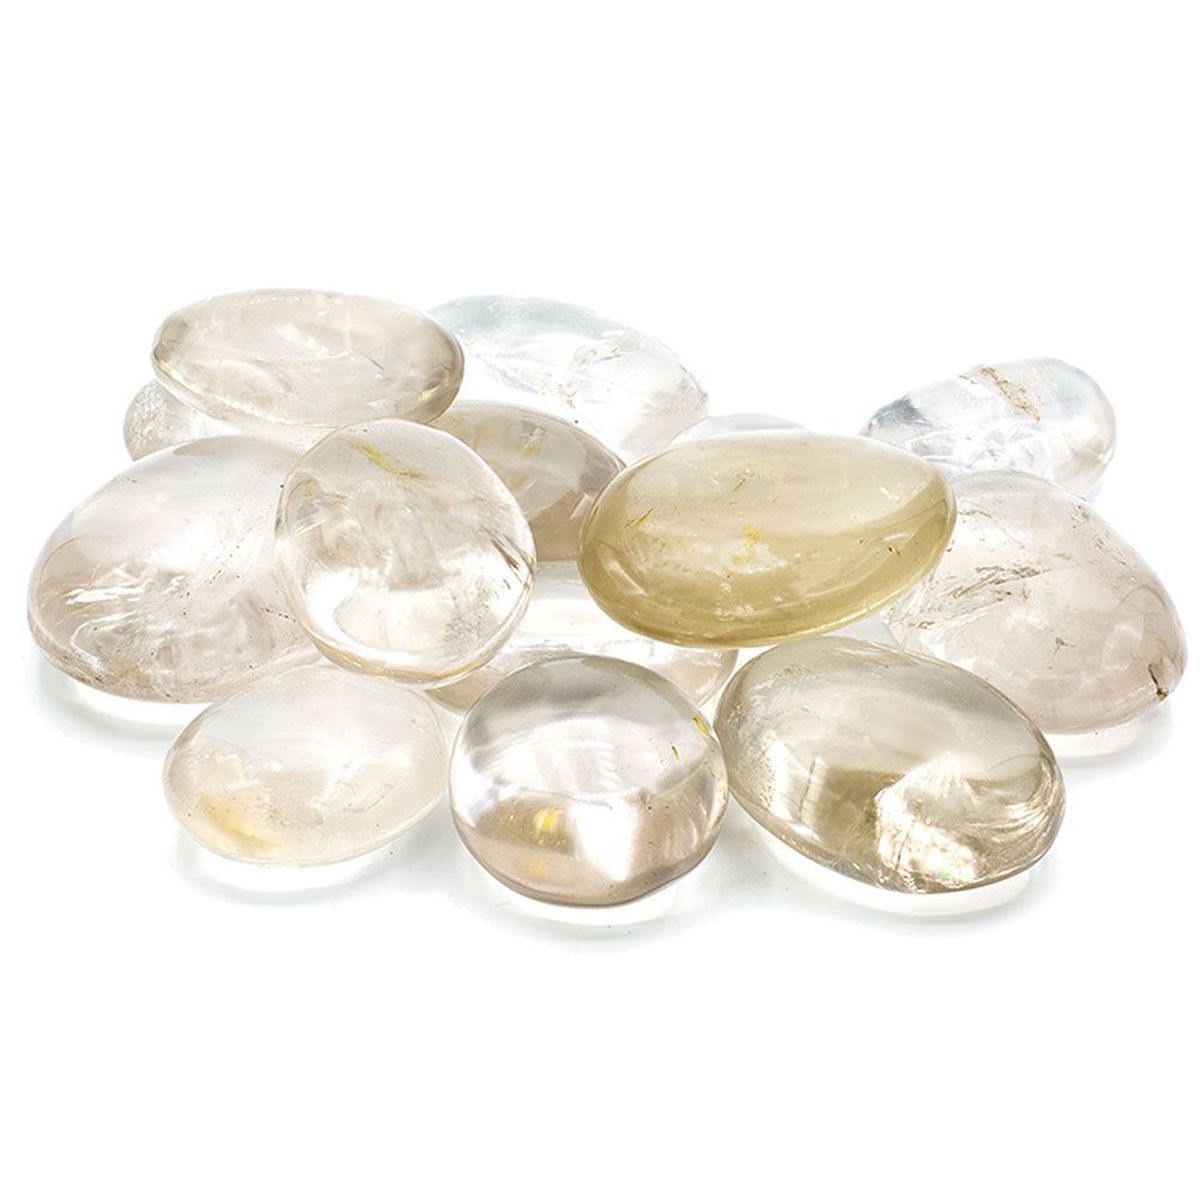 Stones rock crystal 100-110 grams